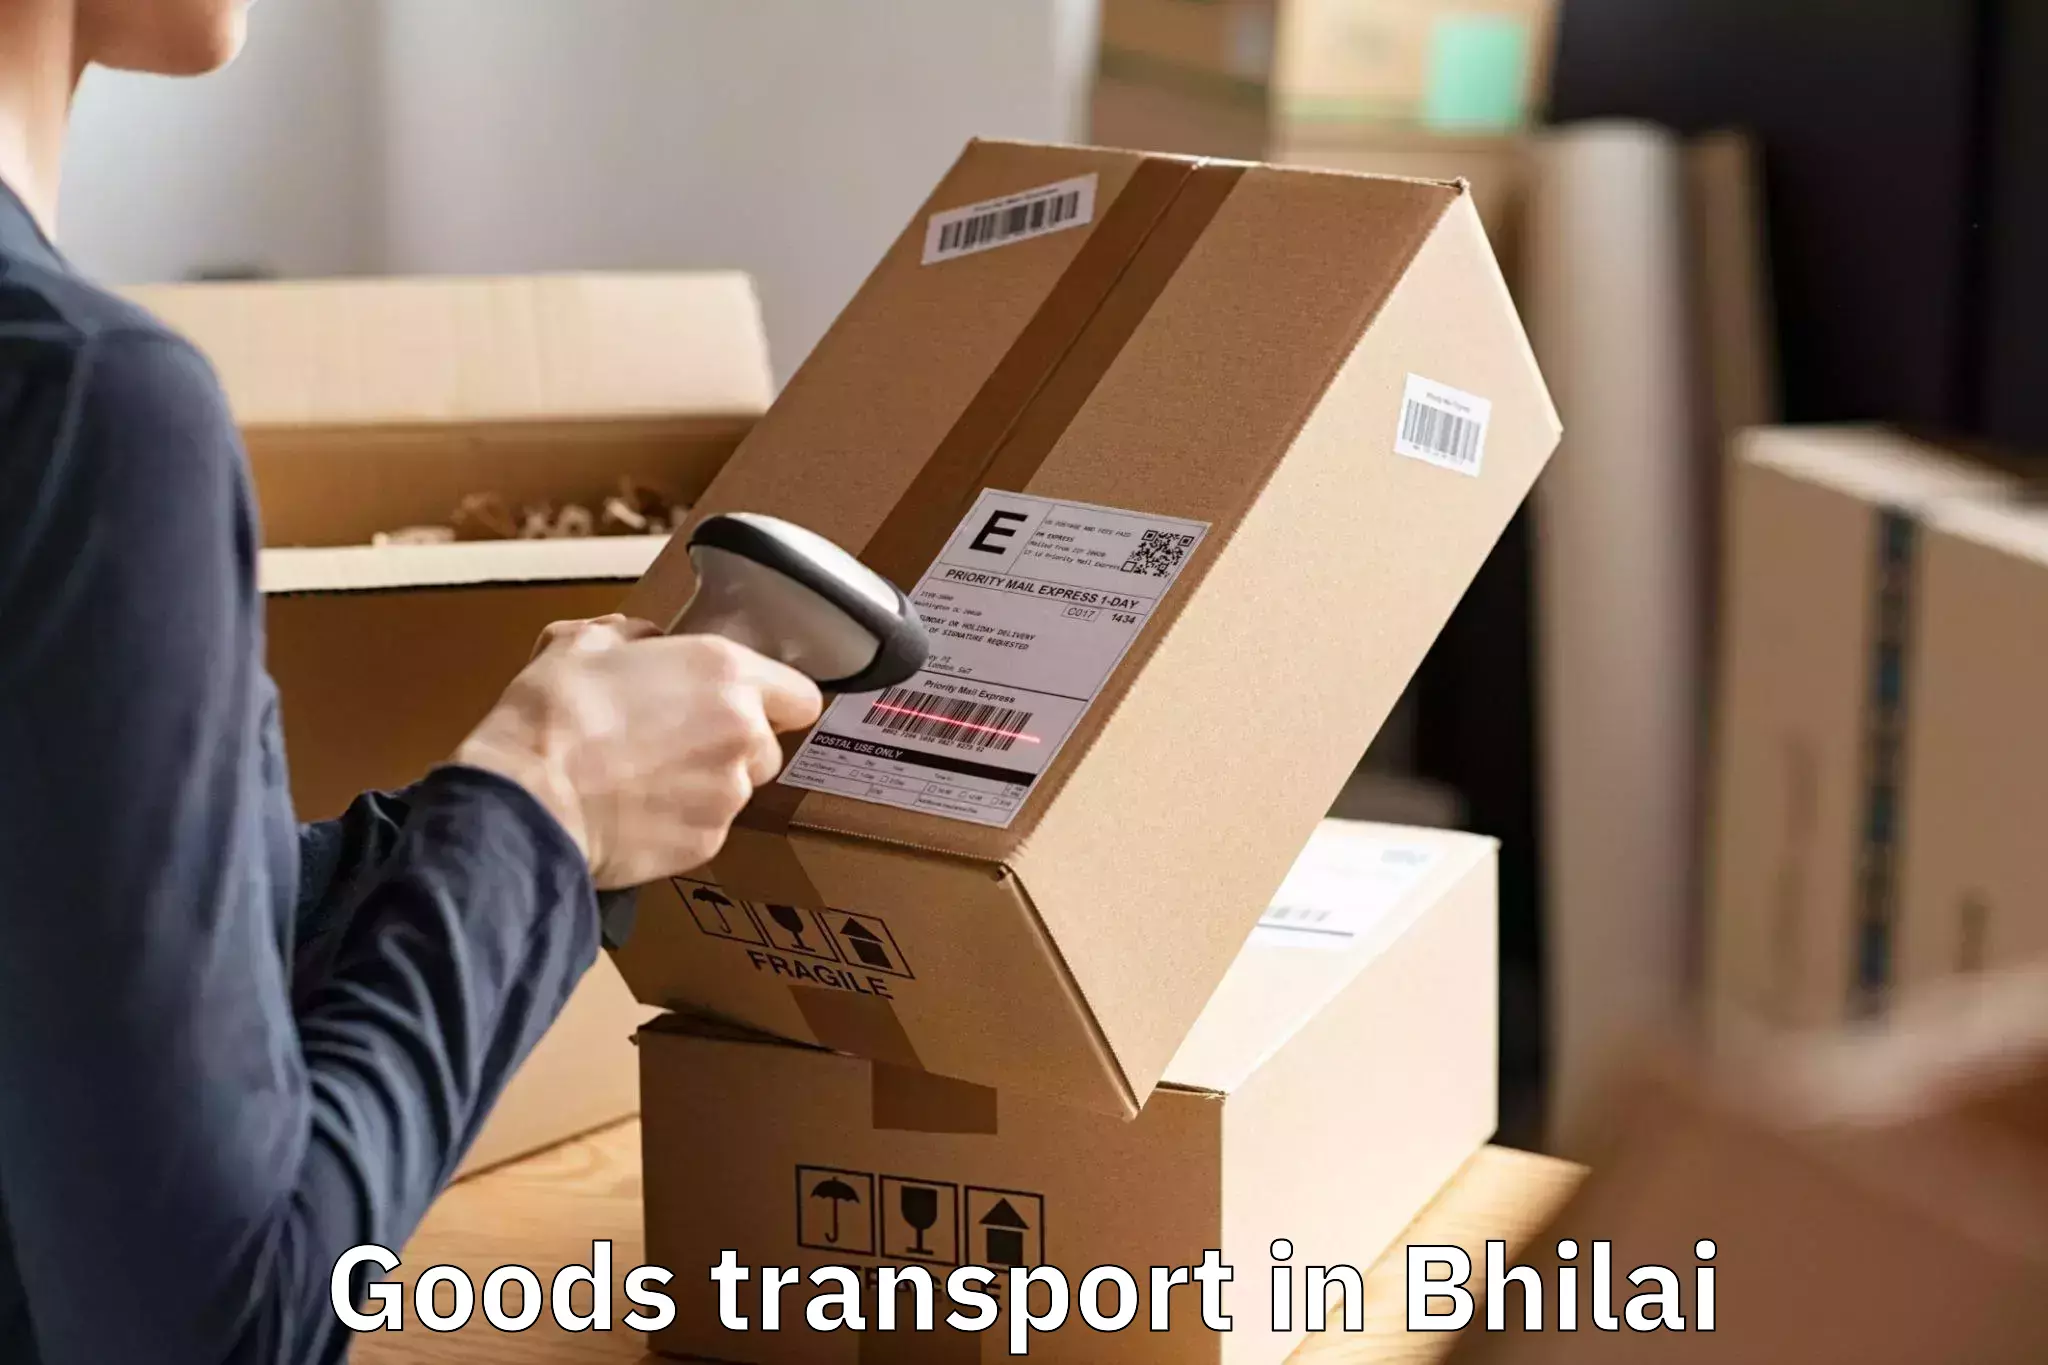 Affordable Goods Transport in Bhilai, Chhattisgarh (CG)